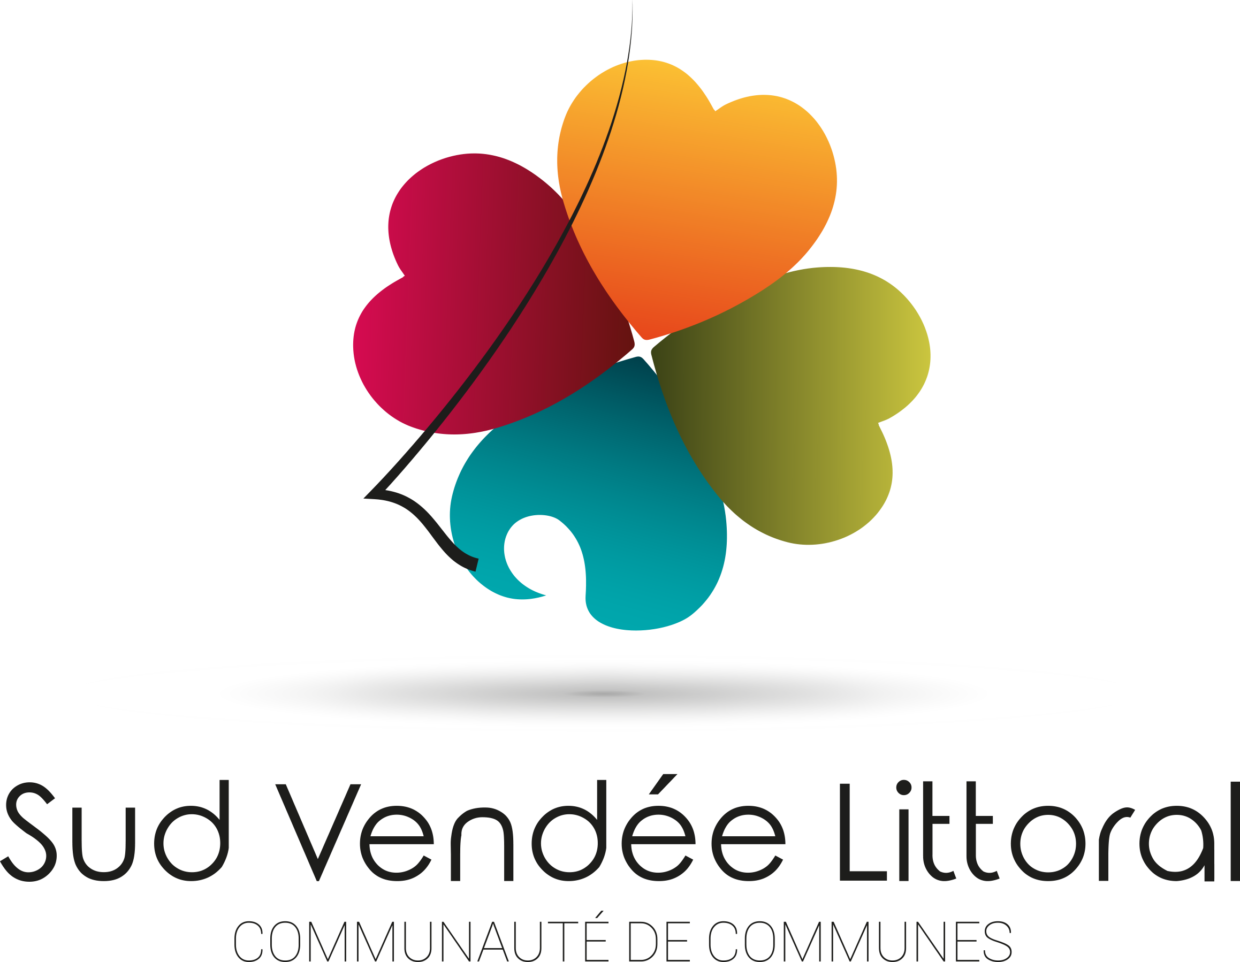 Logo intercommunalité sud vendée littoral